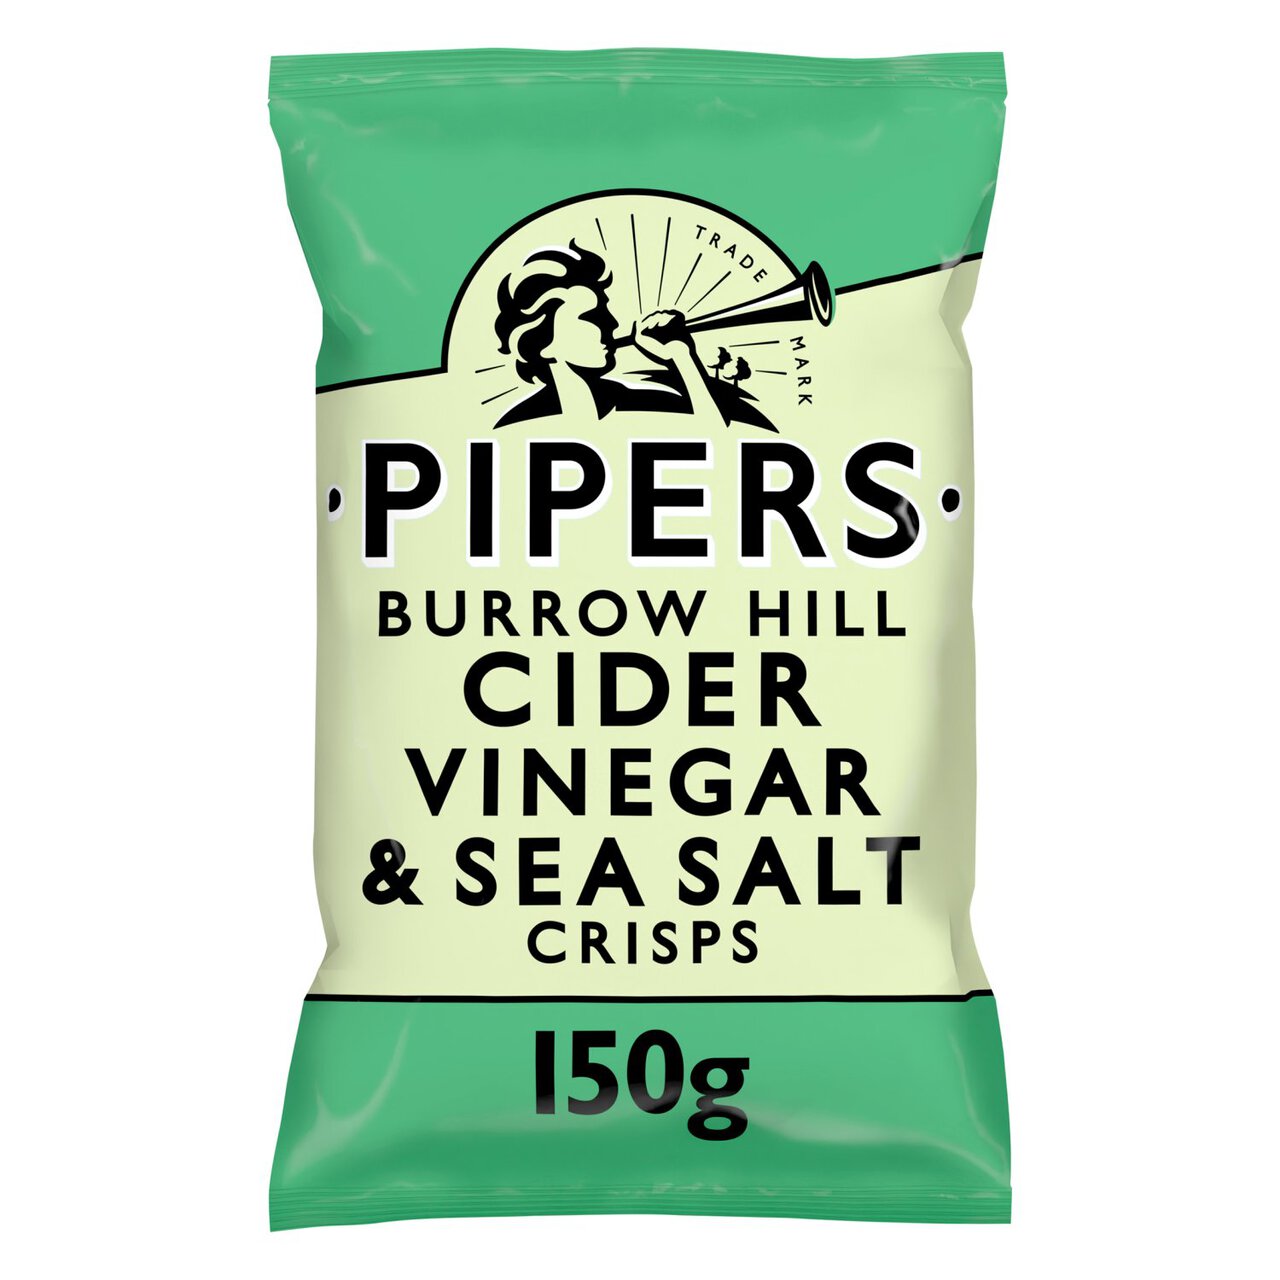 Pipers Burrow Hill Cider Vinegar & Sea Salt Sharing Bag Crisps 150g